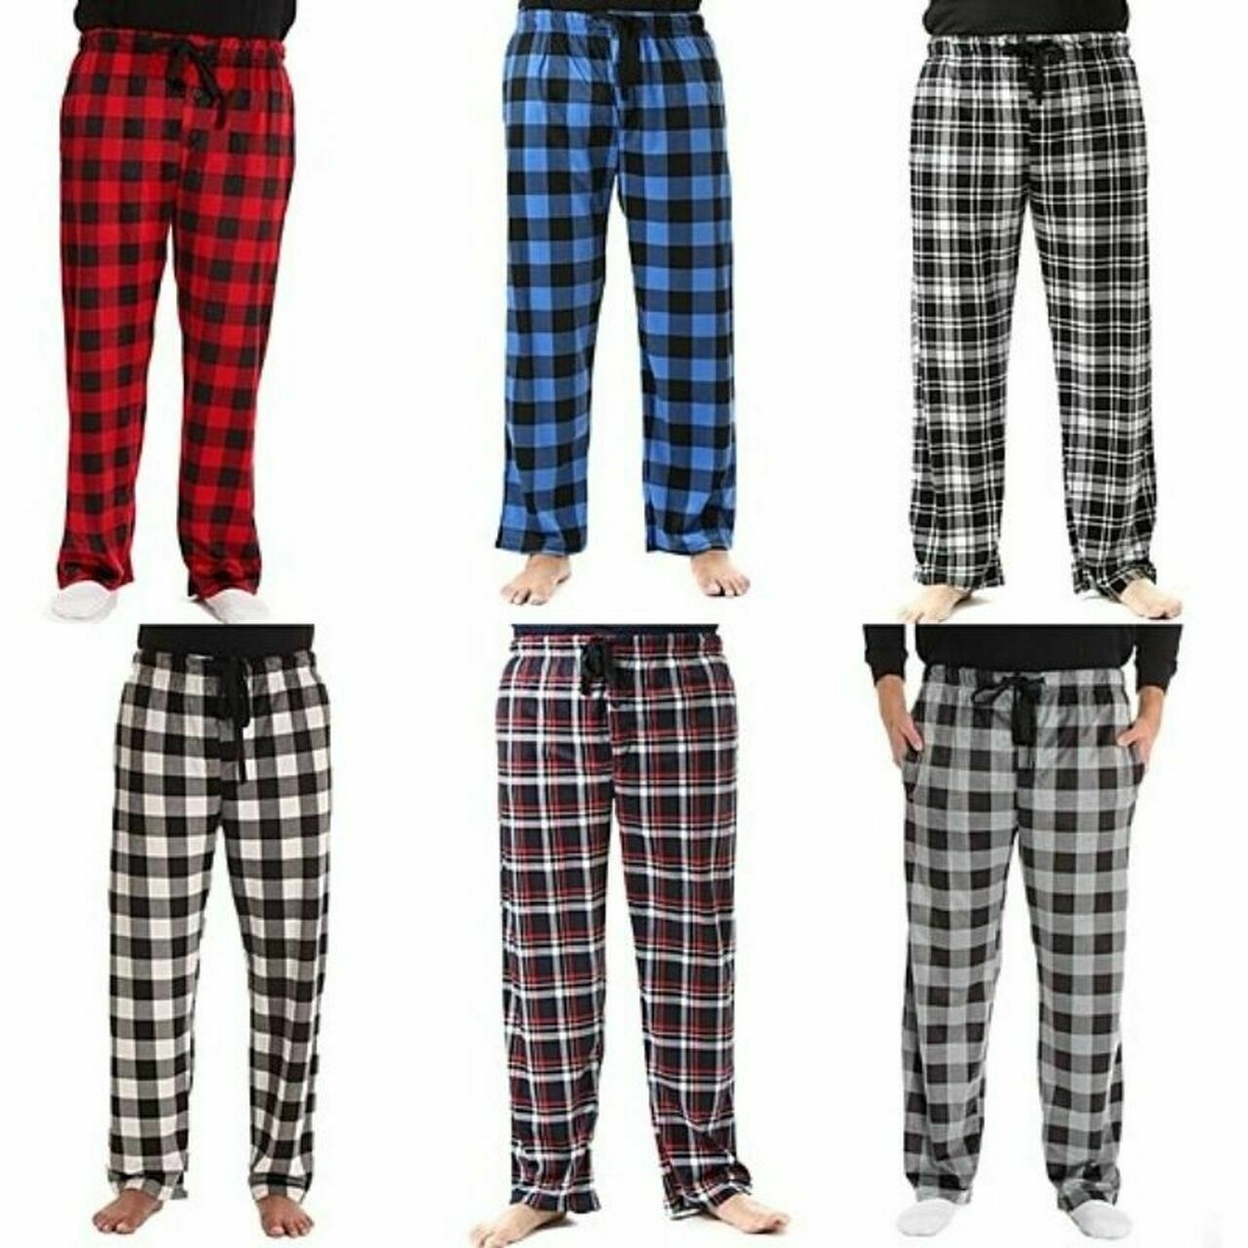 2-Pack: Men's Ultra Soft Cozy Flannel Fleece Plaid Pajama Sleep Bottom Lounge Pants - Black & Red, Medium